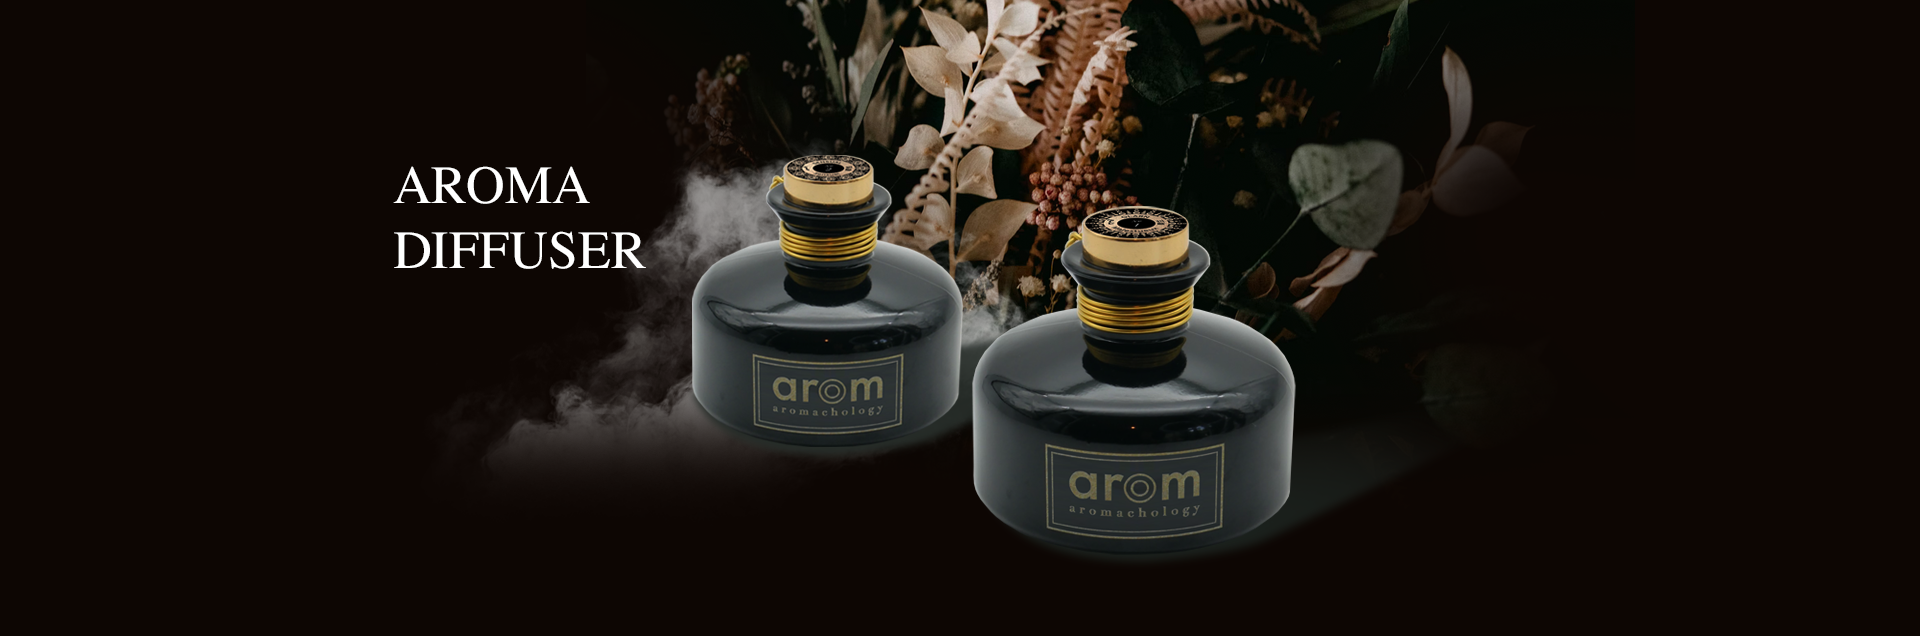 aroma diffuser  ก้านไม้หอมระเหยปรับอากาศ